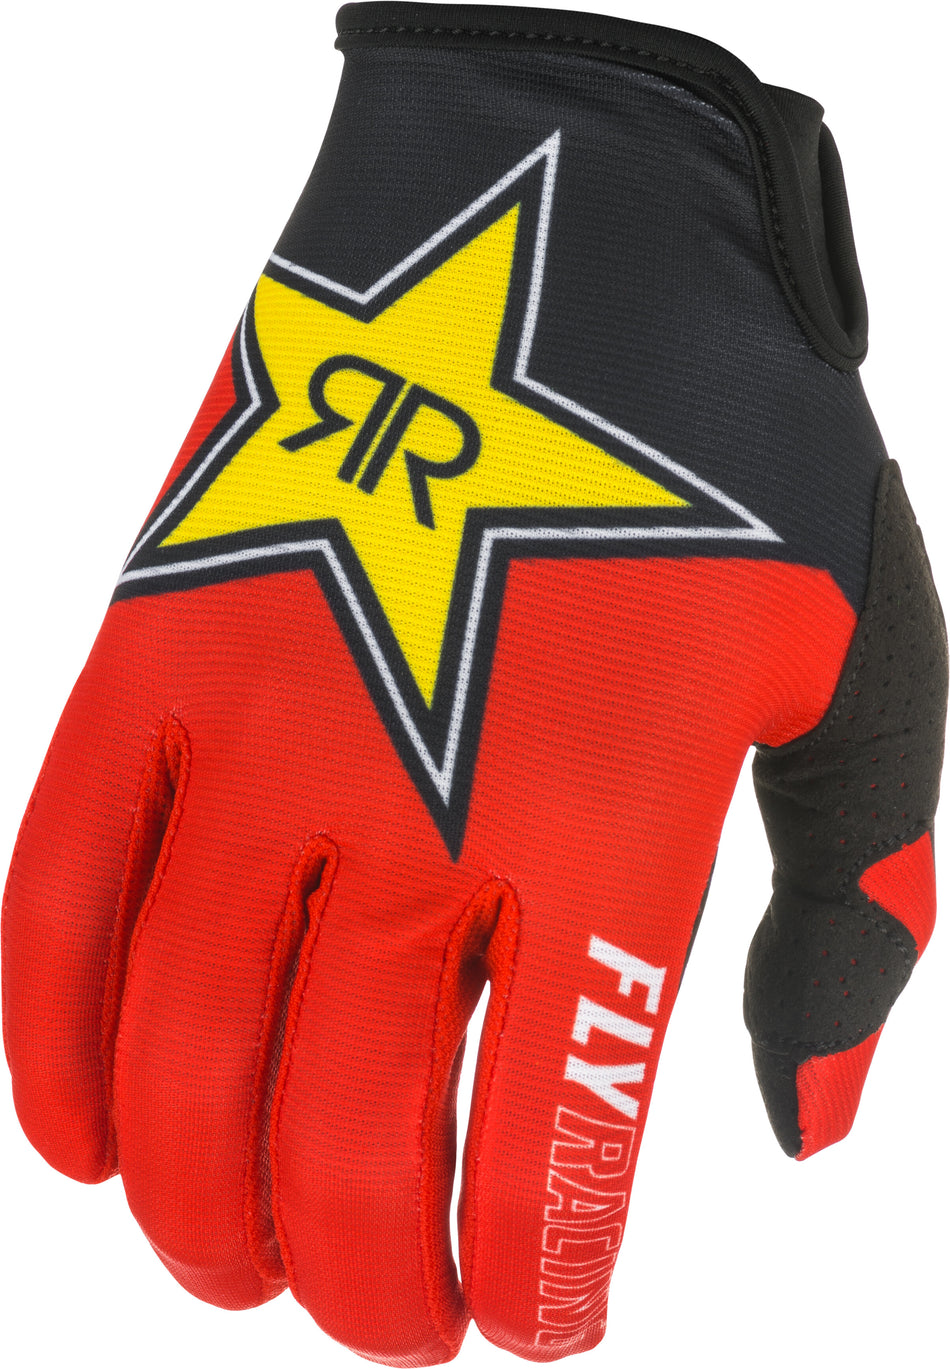 FLY RACING Lite Rockstar Gloves Black/Red/Yellow Sz 07 374-01307